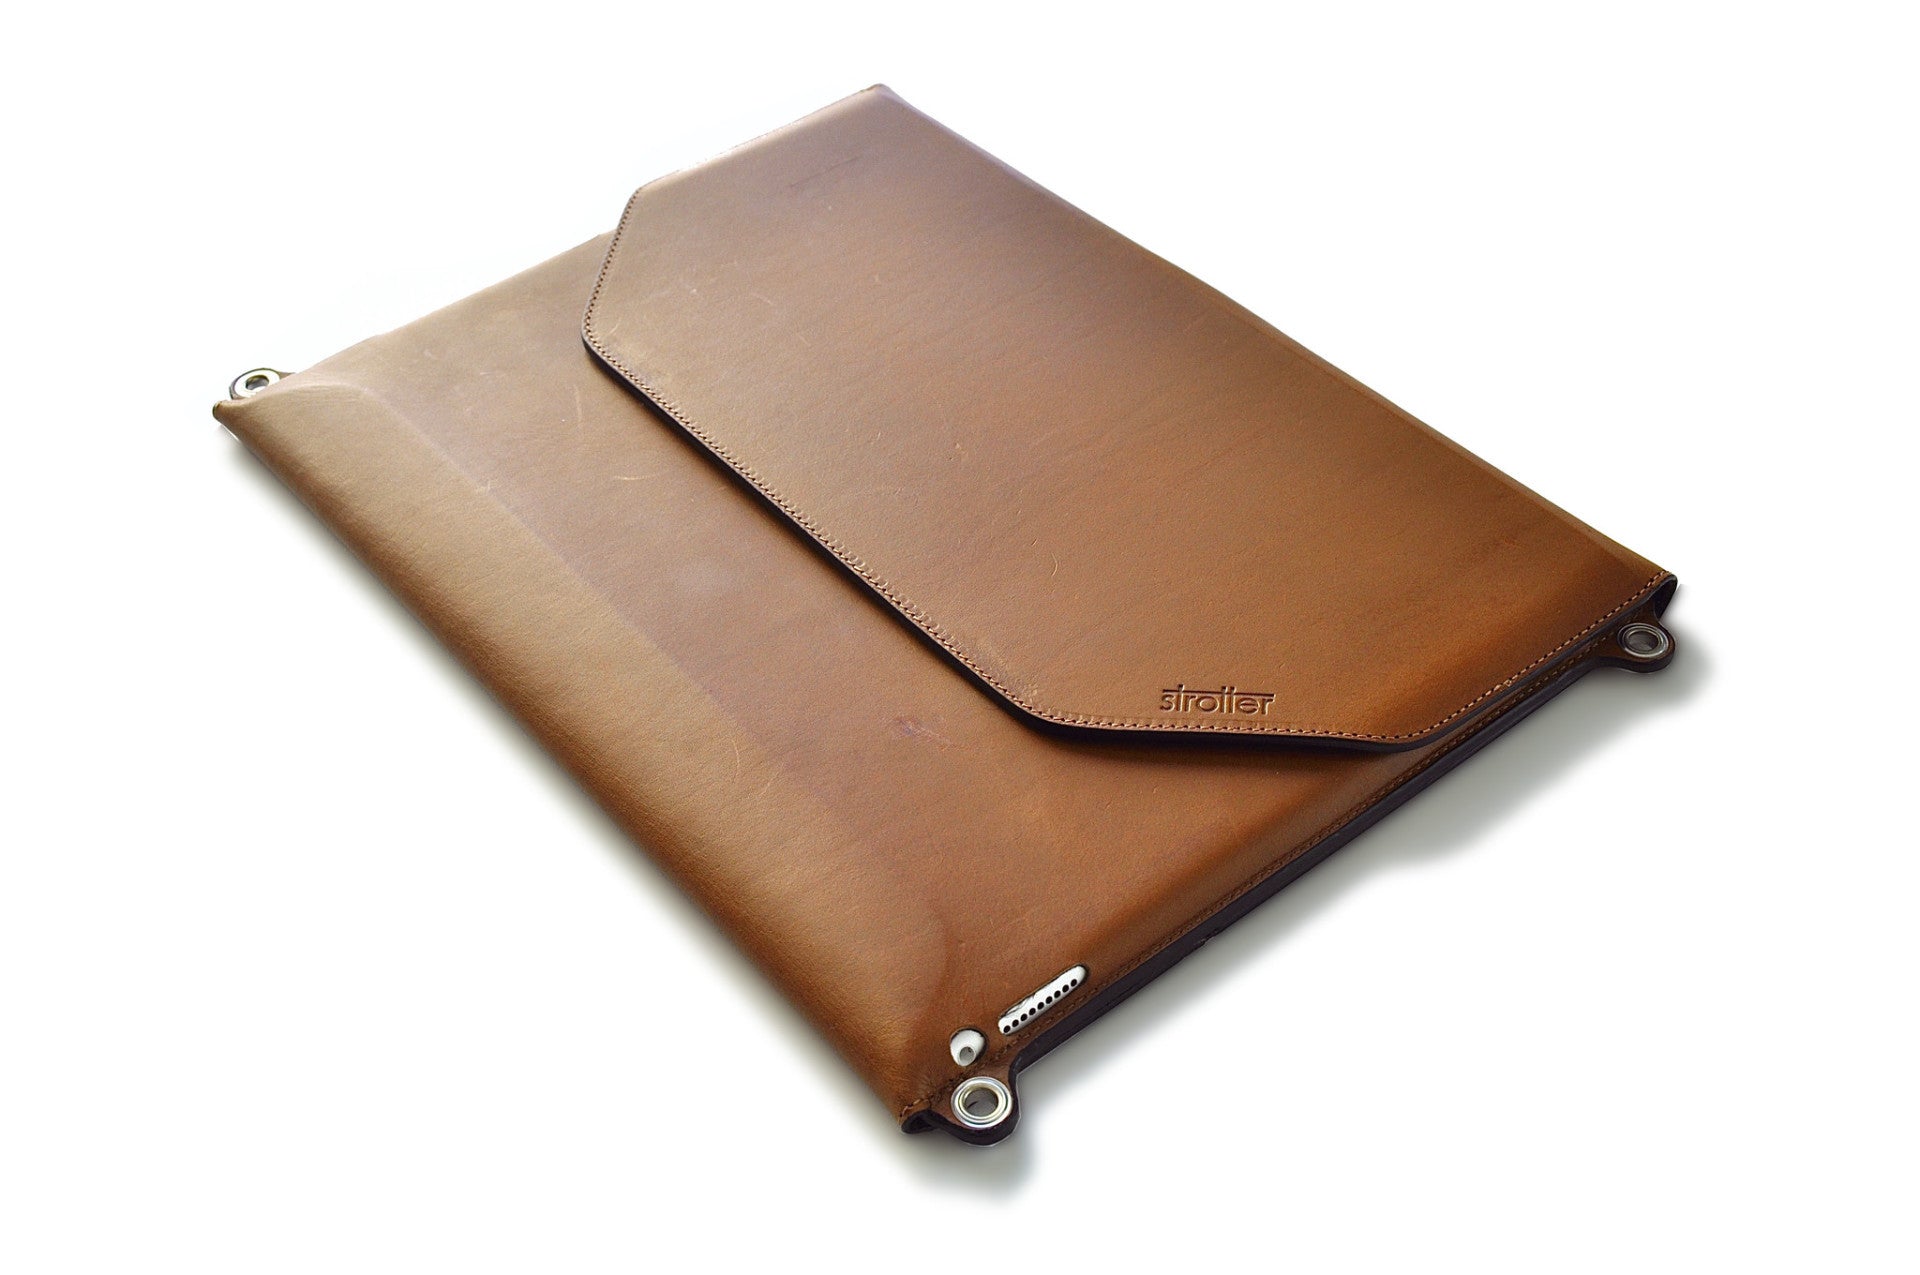 Cuoio leather iPad case